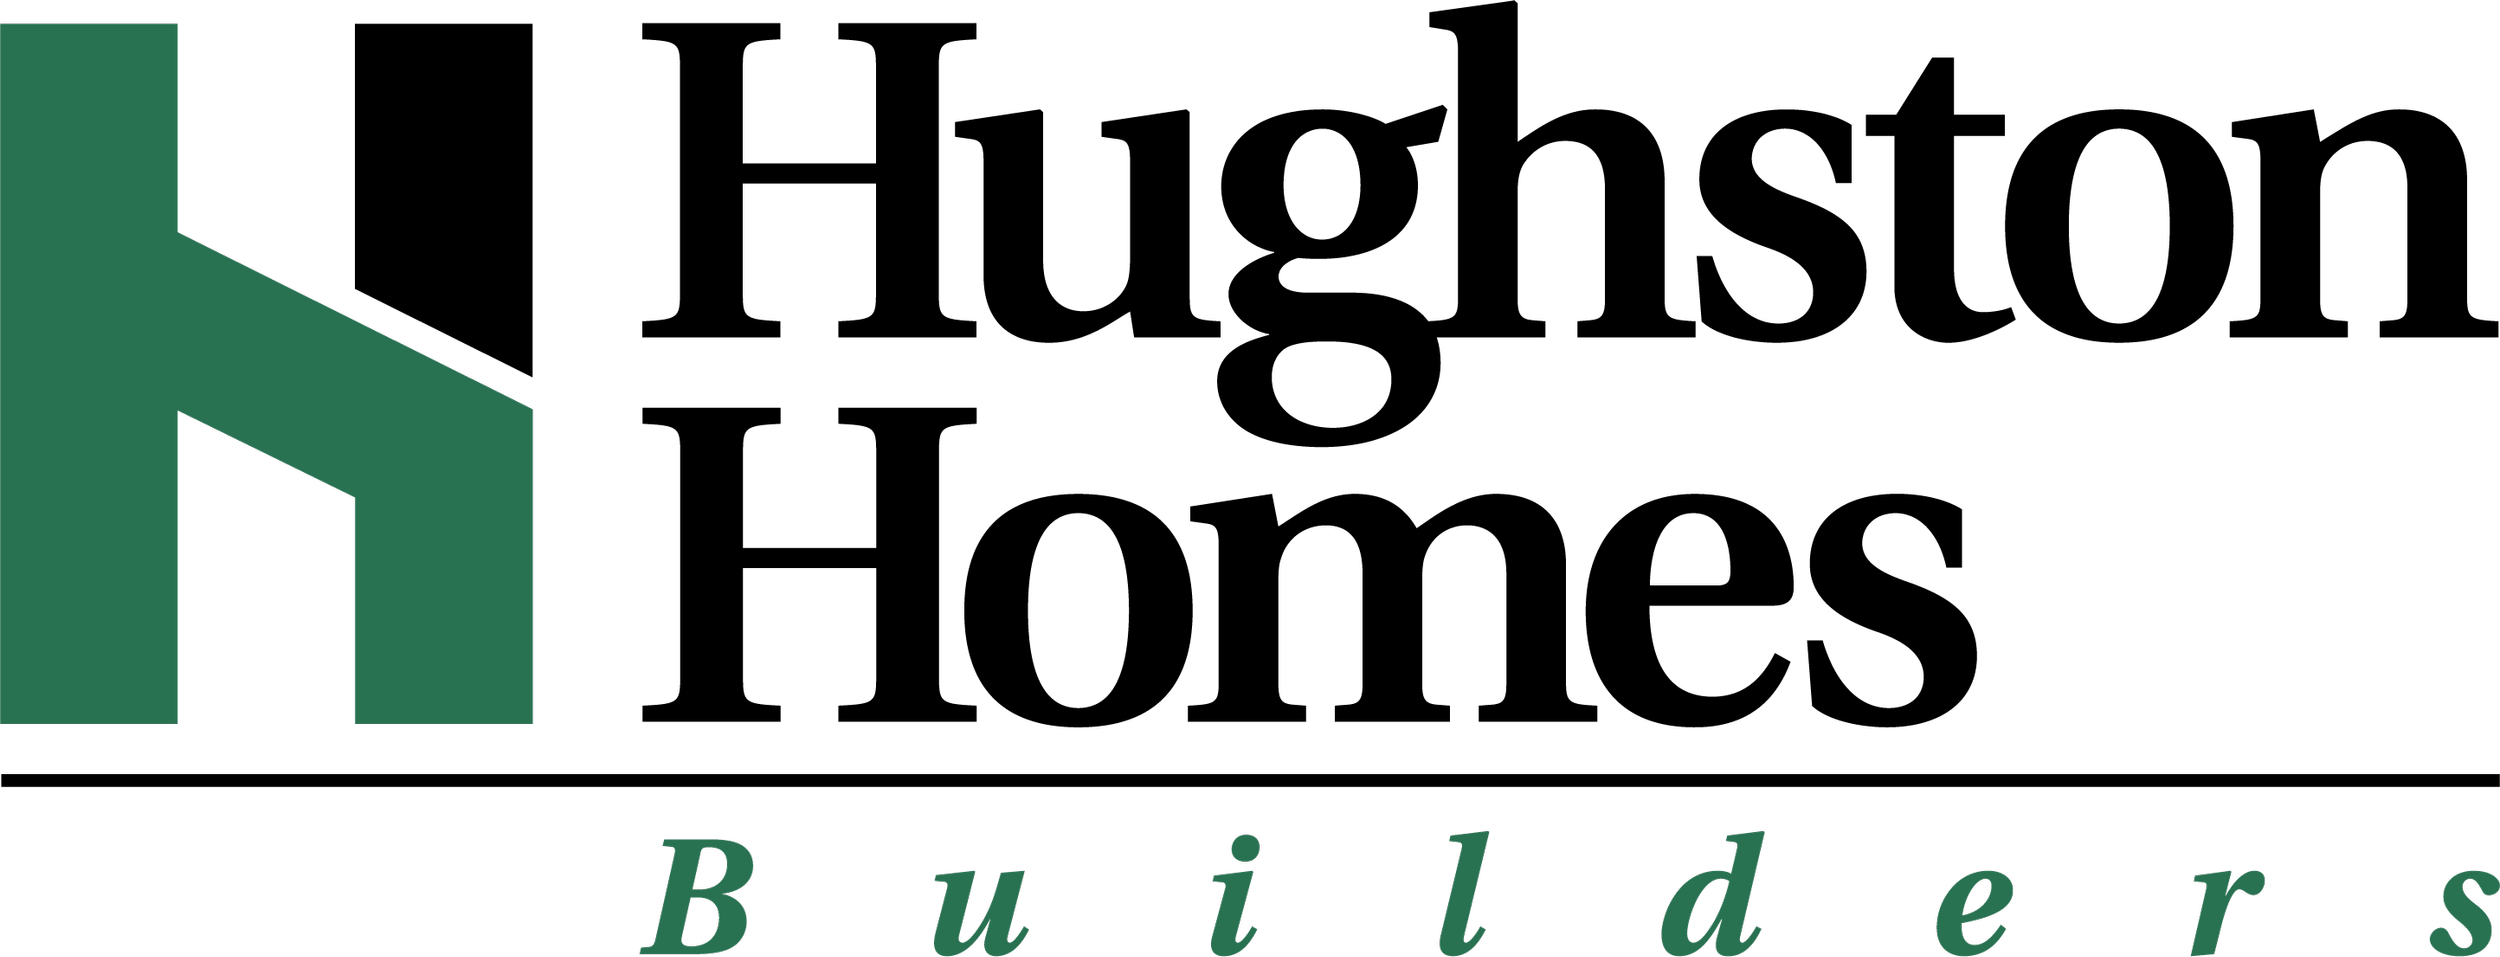 Hughston-Homes-Builders-Logo.png